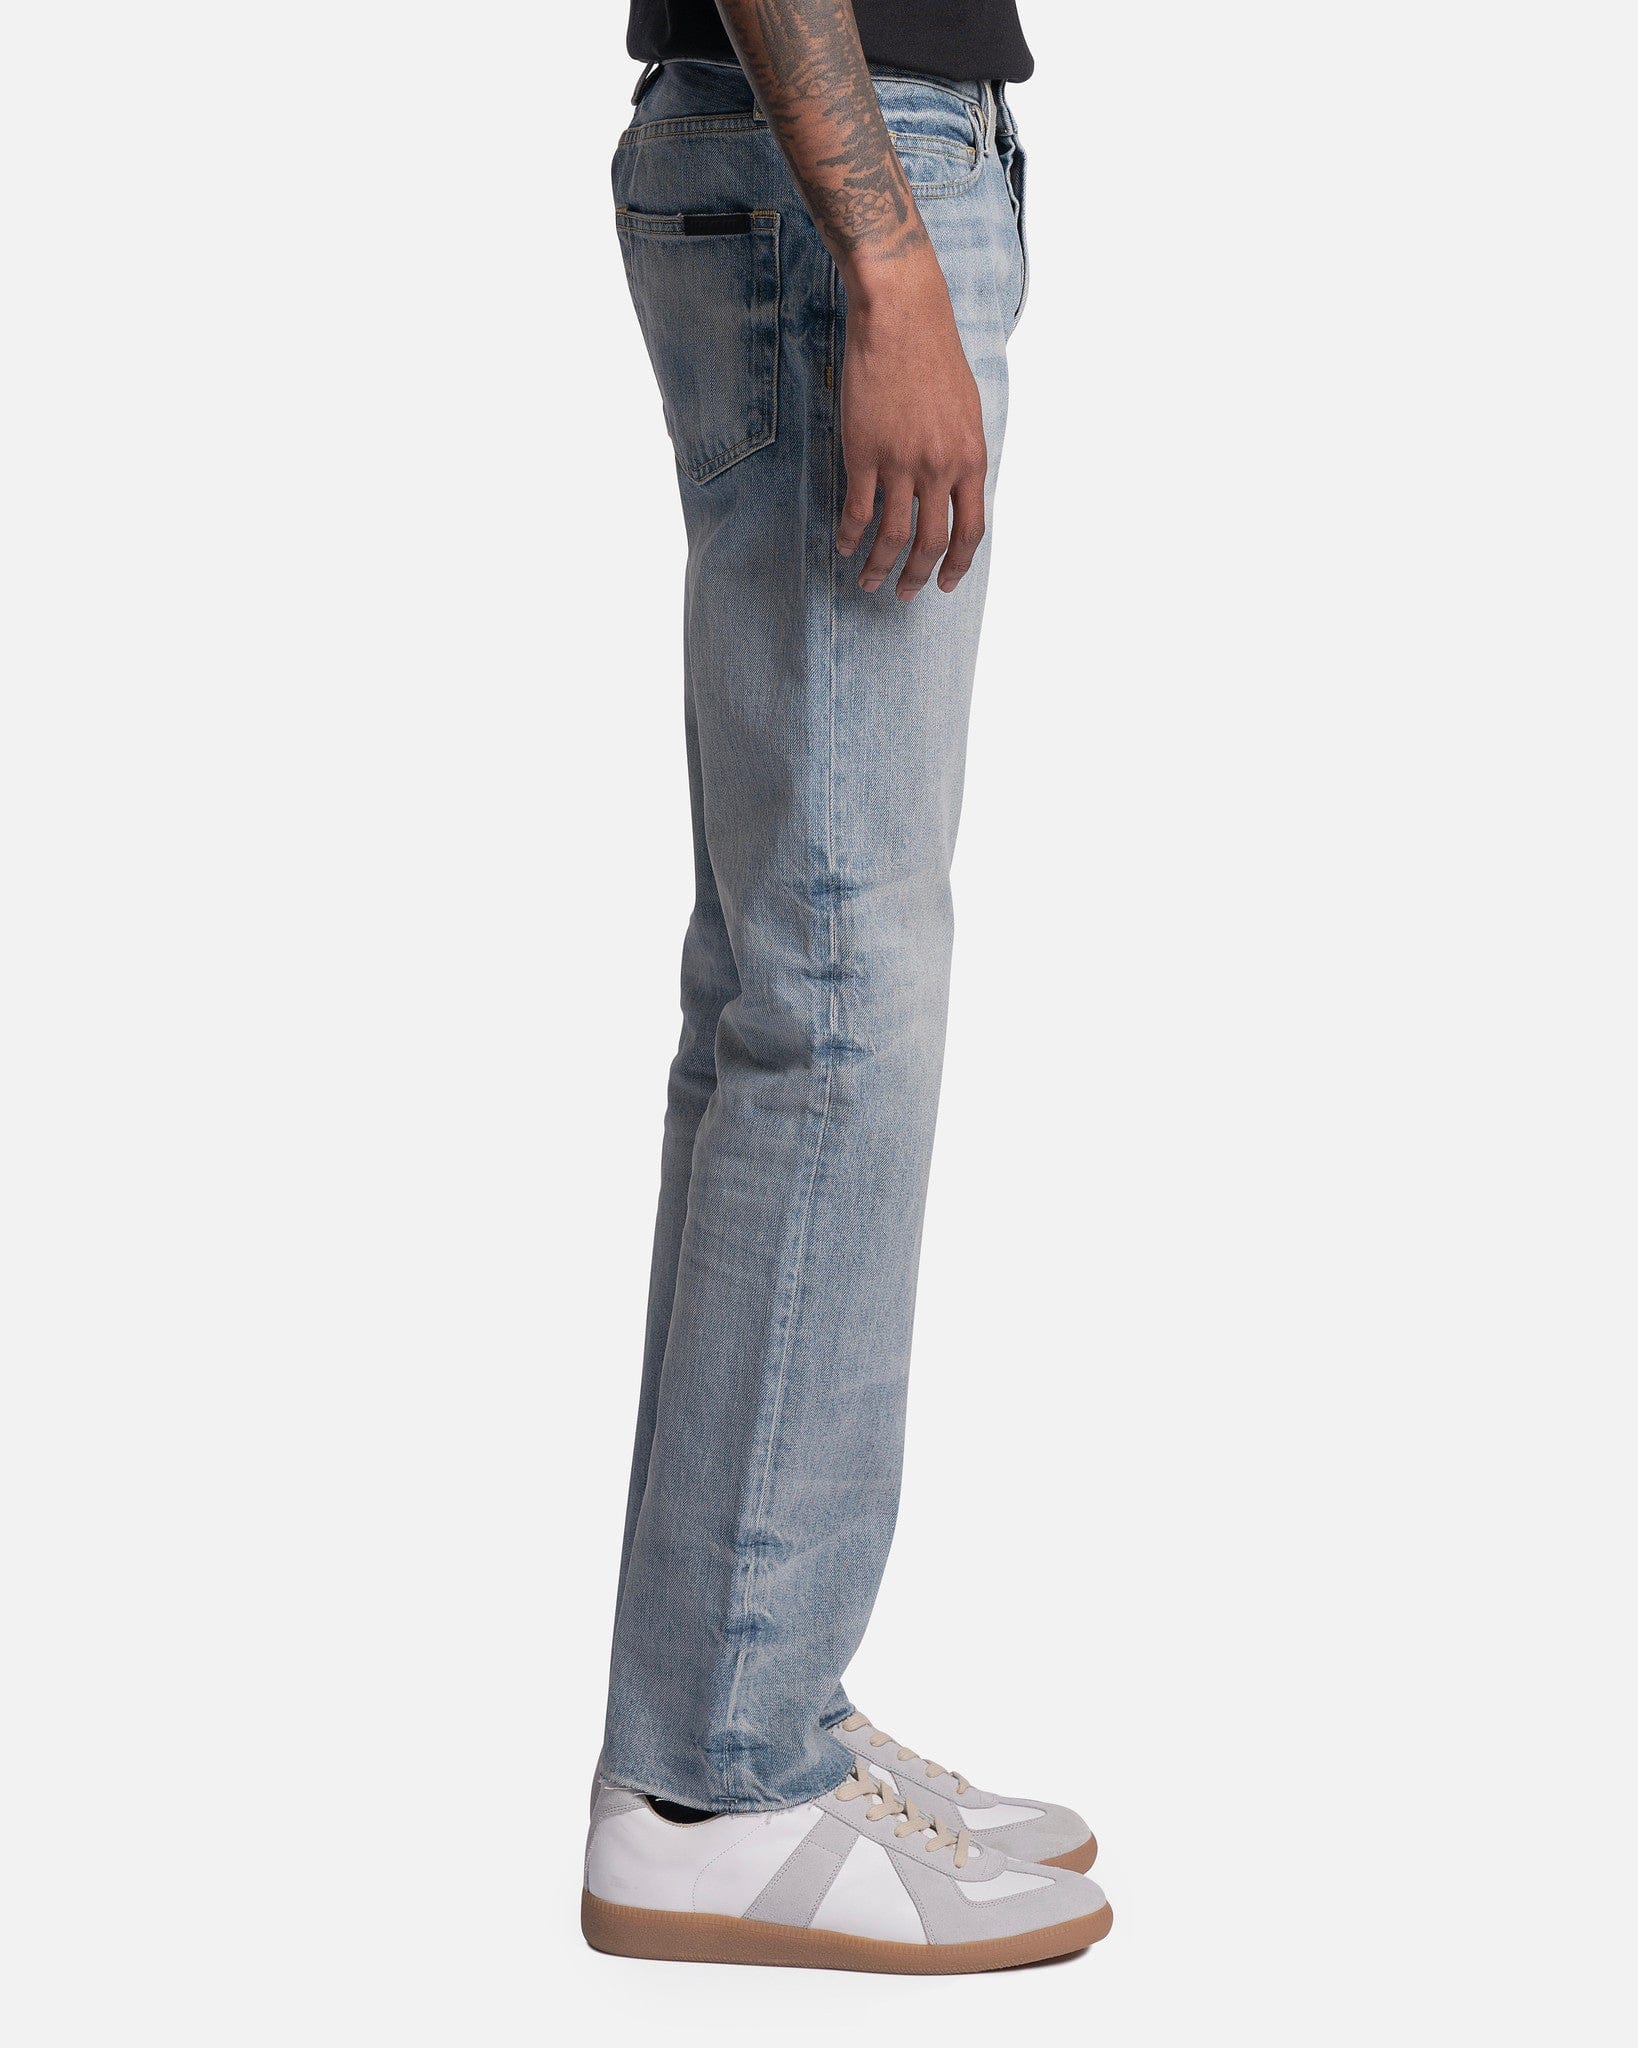 Fear of God Men's Jeans Eternal Denim 5 Pocket in 5 Year Indigo